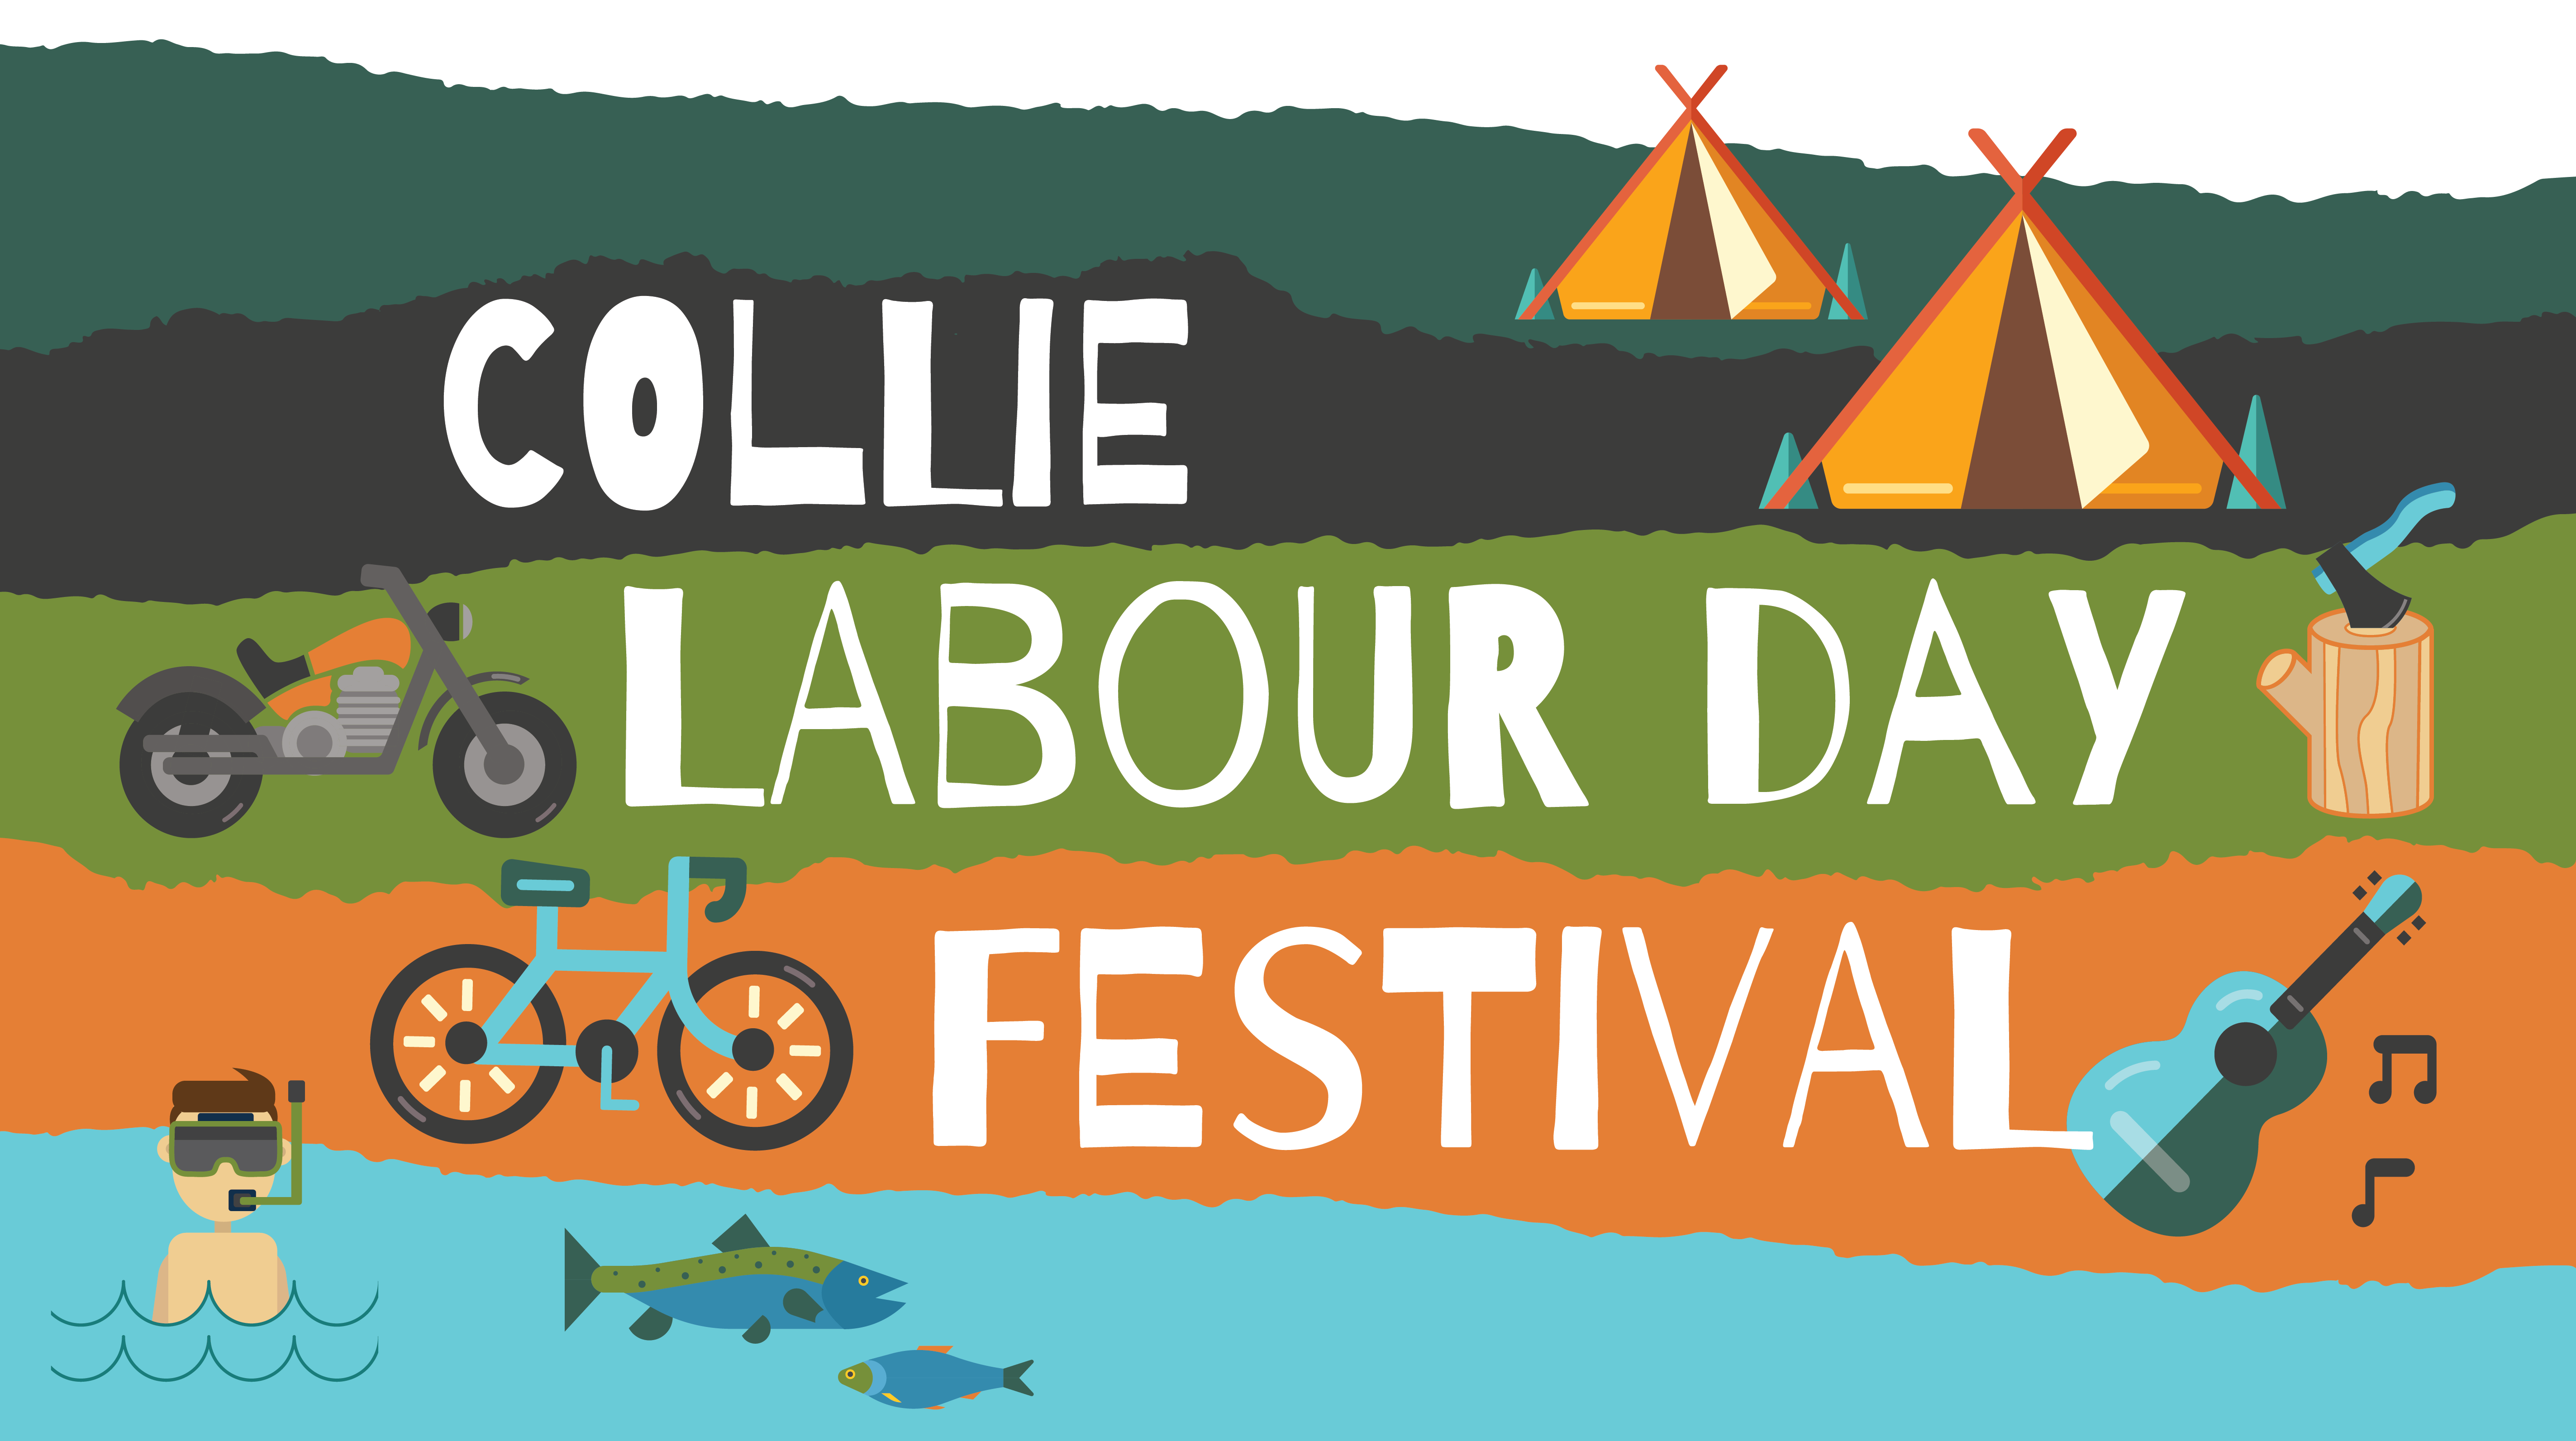 Collie Labour Day Festival